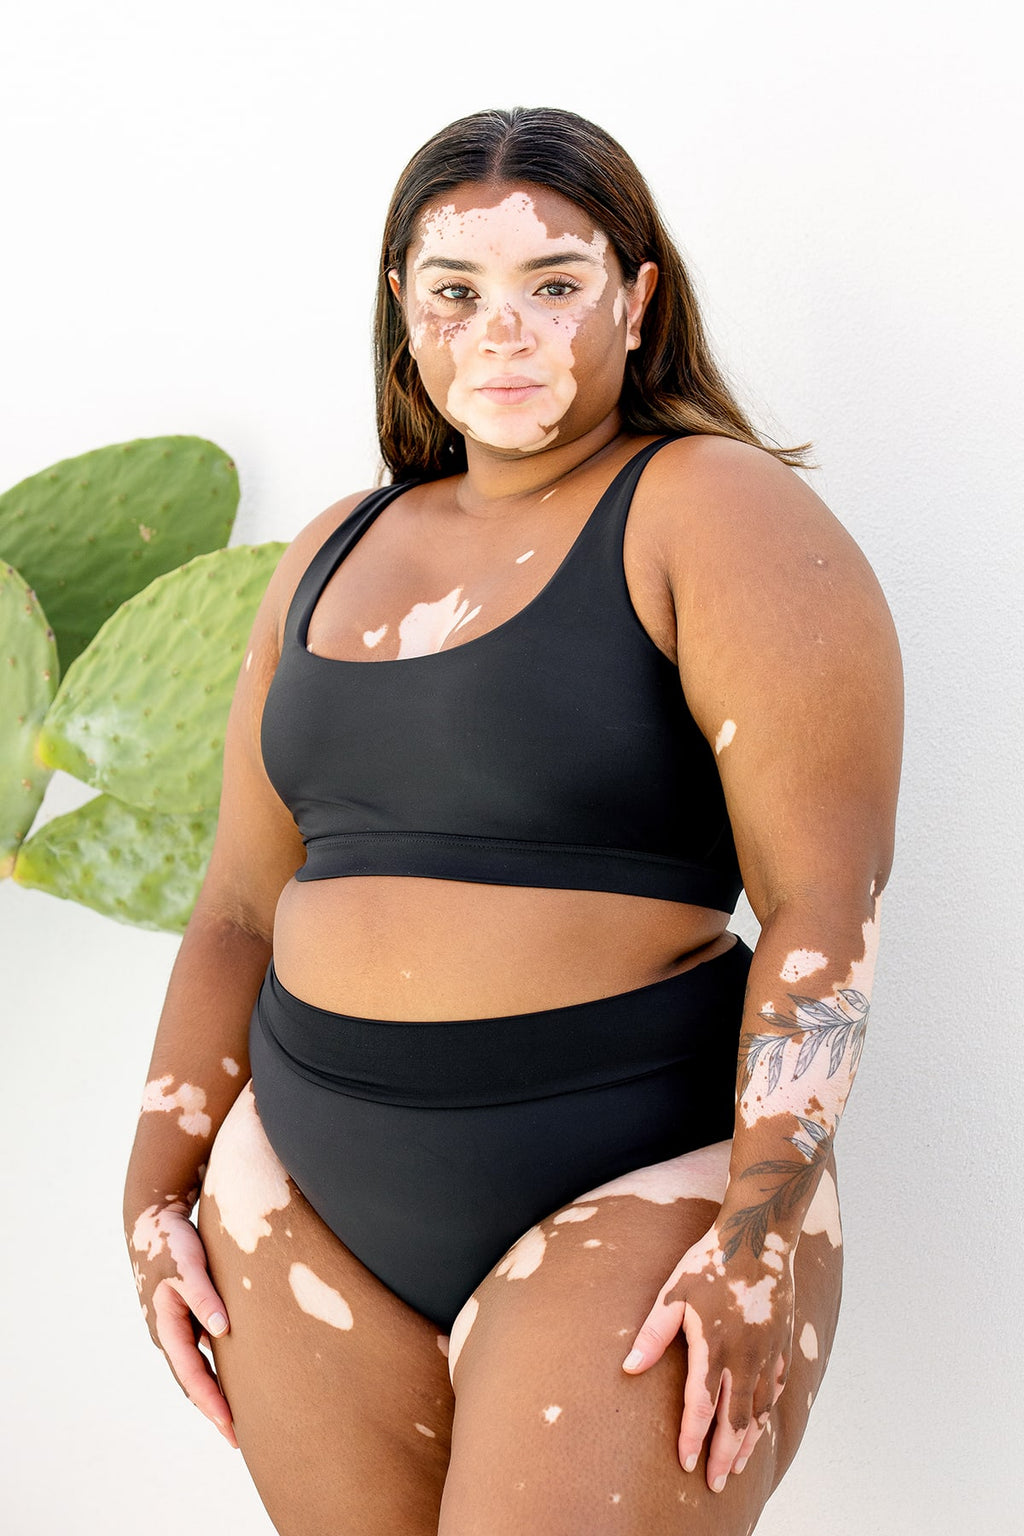 Love & Sports Women's Black Scrunchy Square Neck Pull-over Bikini Top,  Sizes XS-XXL